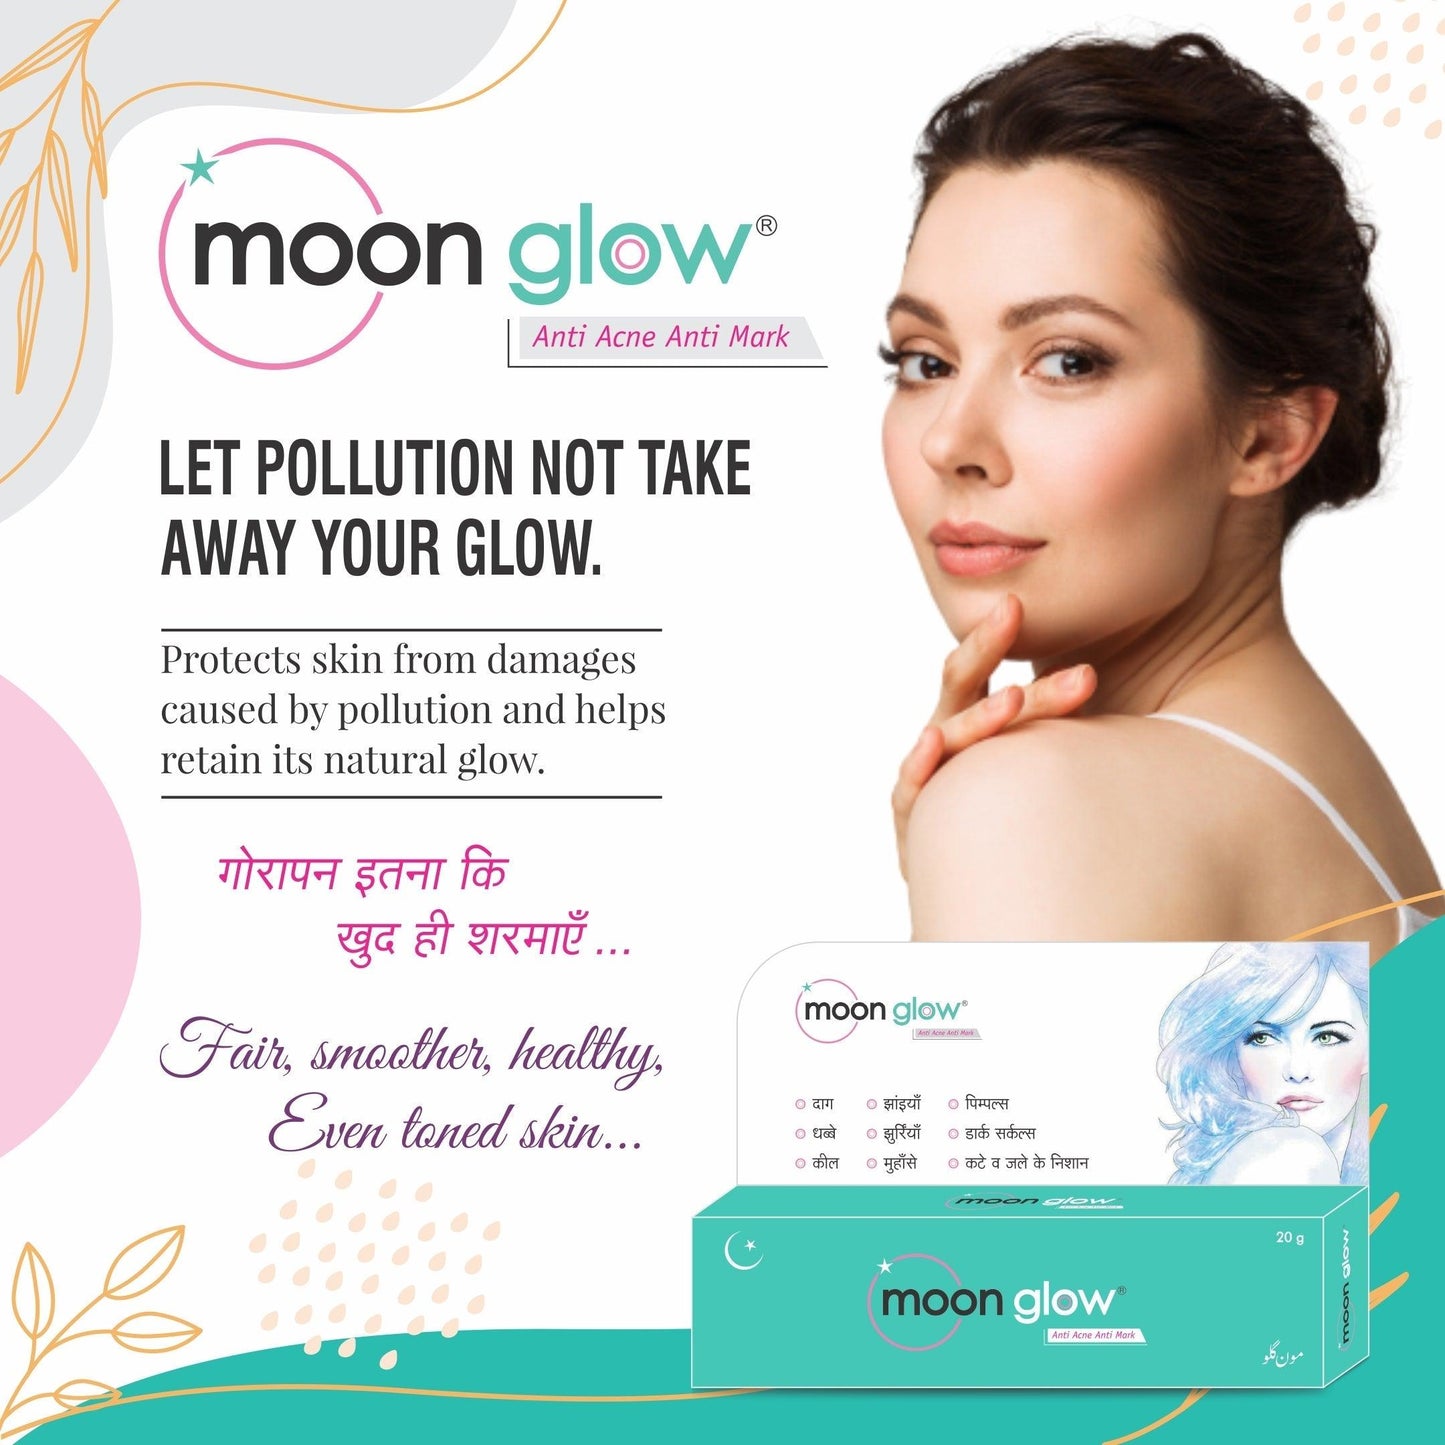 Moon Glow Cream & Pearl Face Wash for Acne, Pimples, Black Spots, Dark Circles, Stretch Marks, Anti-Aging and Fairness (1 cream + 1 facewash + 1 soap) - Olefia Biopharma Limited